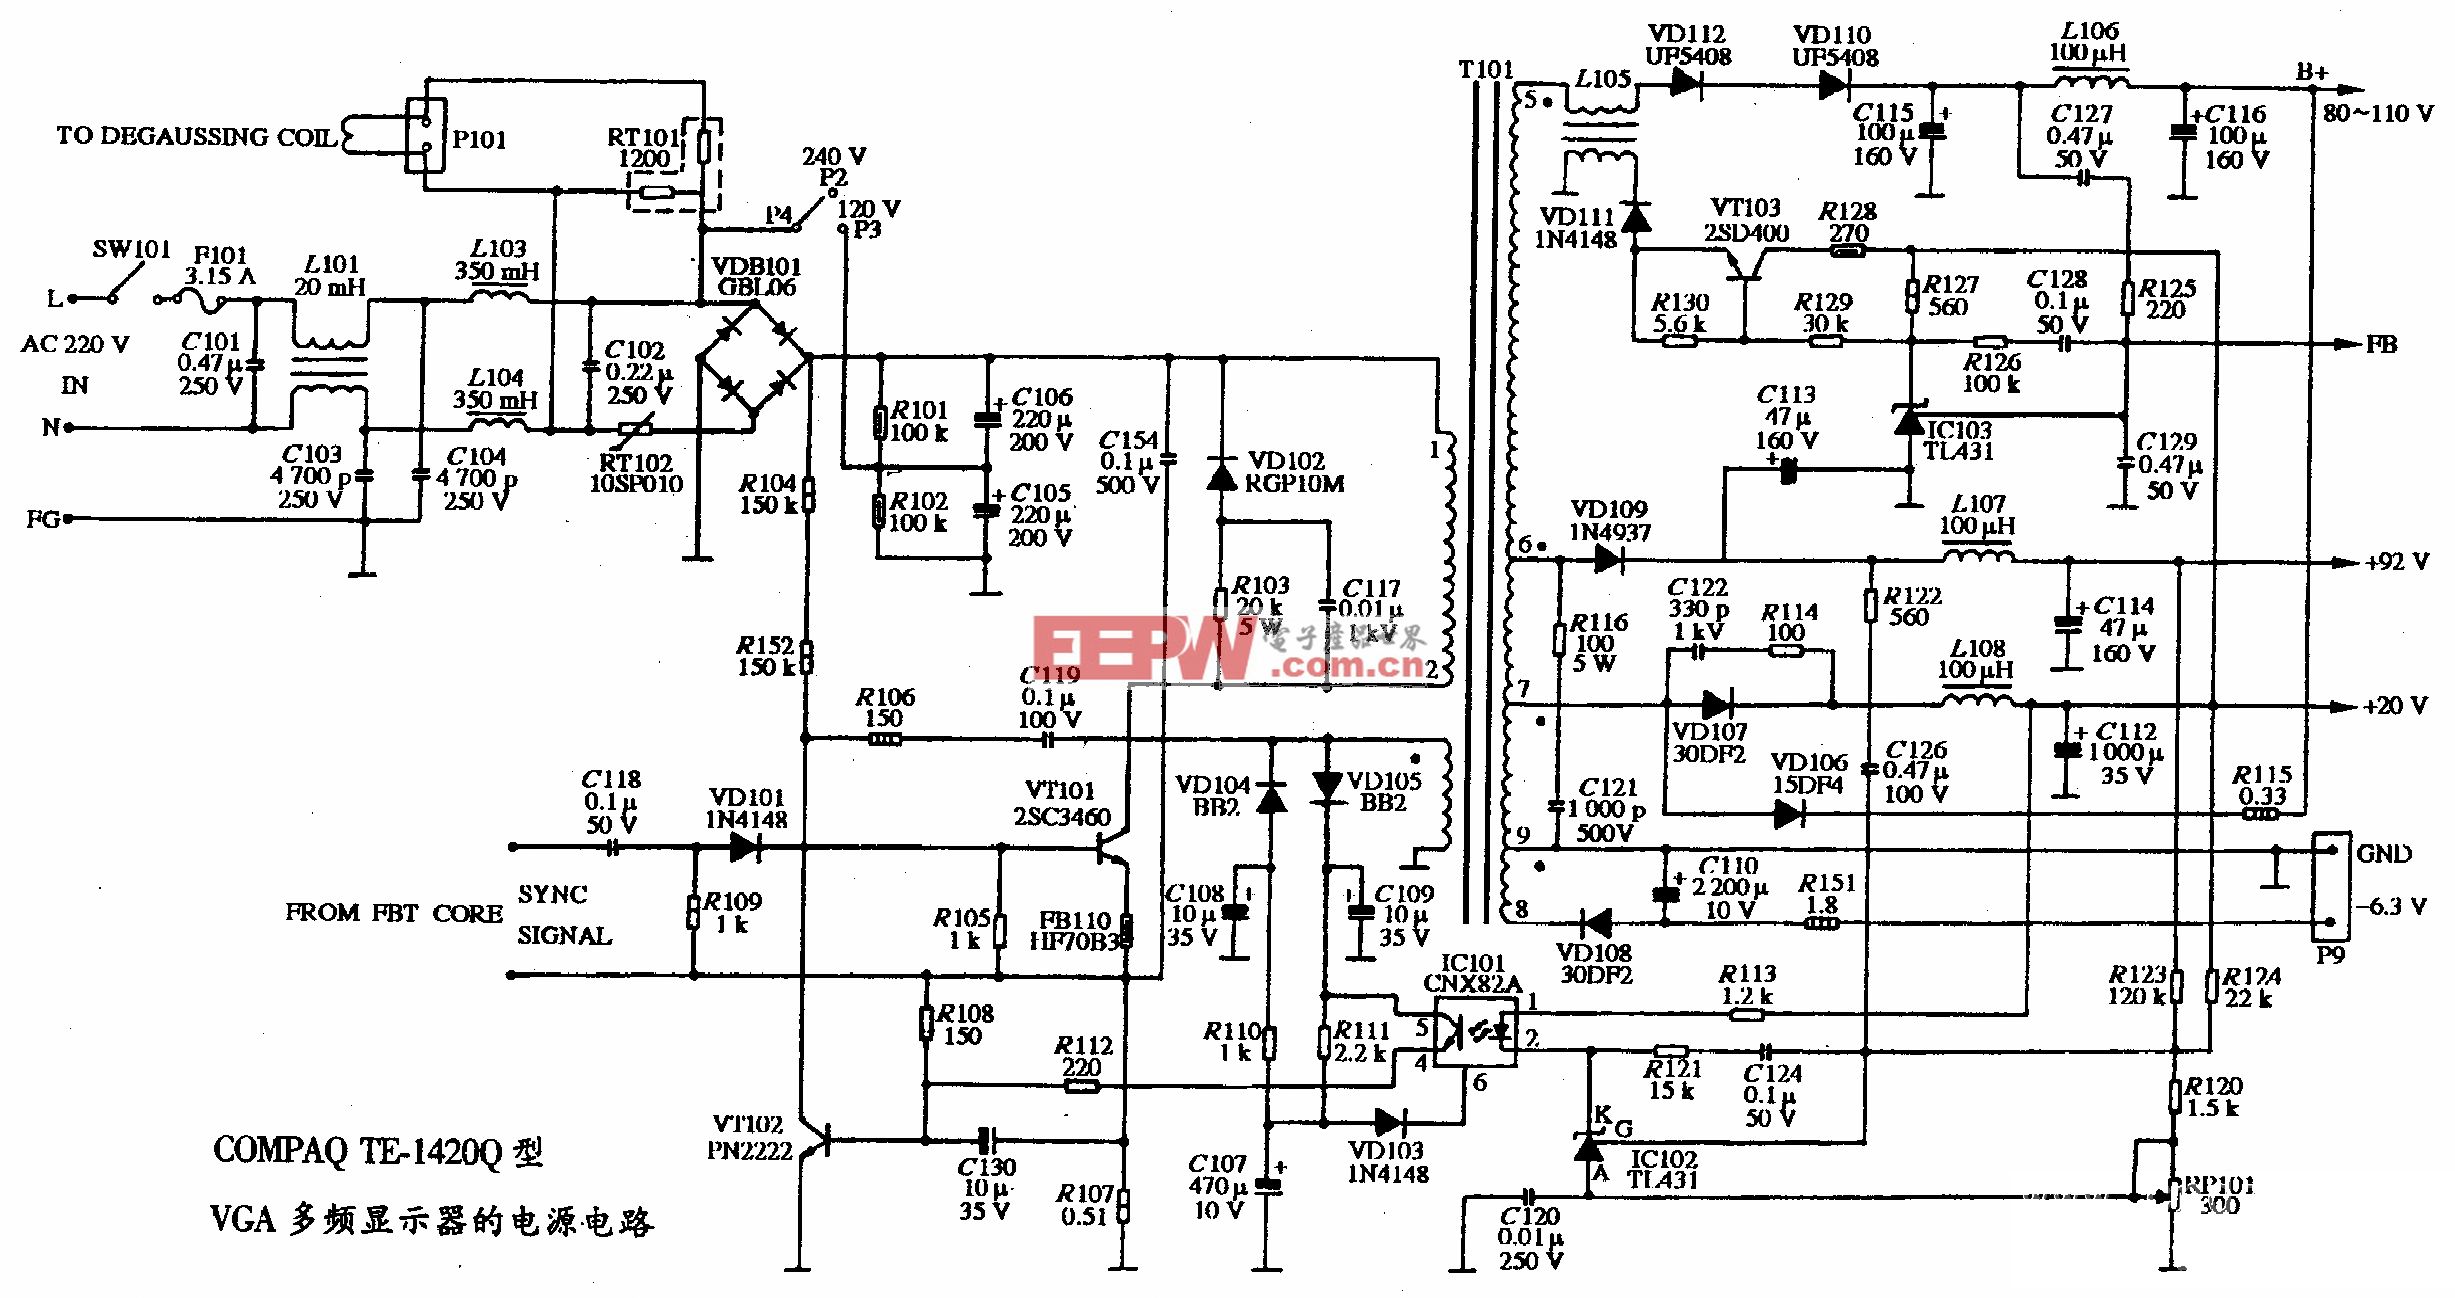 COMPAQ TE-1420Q型VGA多頻顯示器的電源電路圖